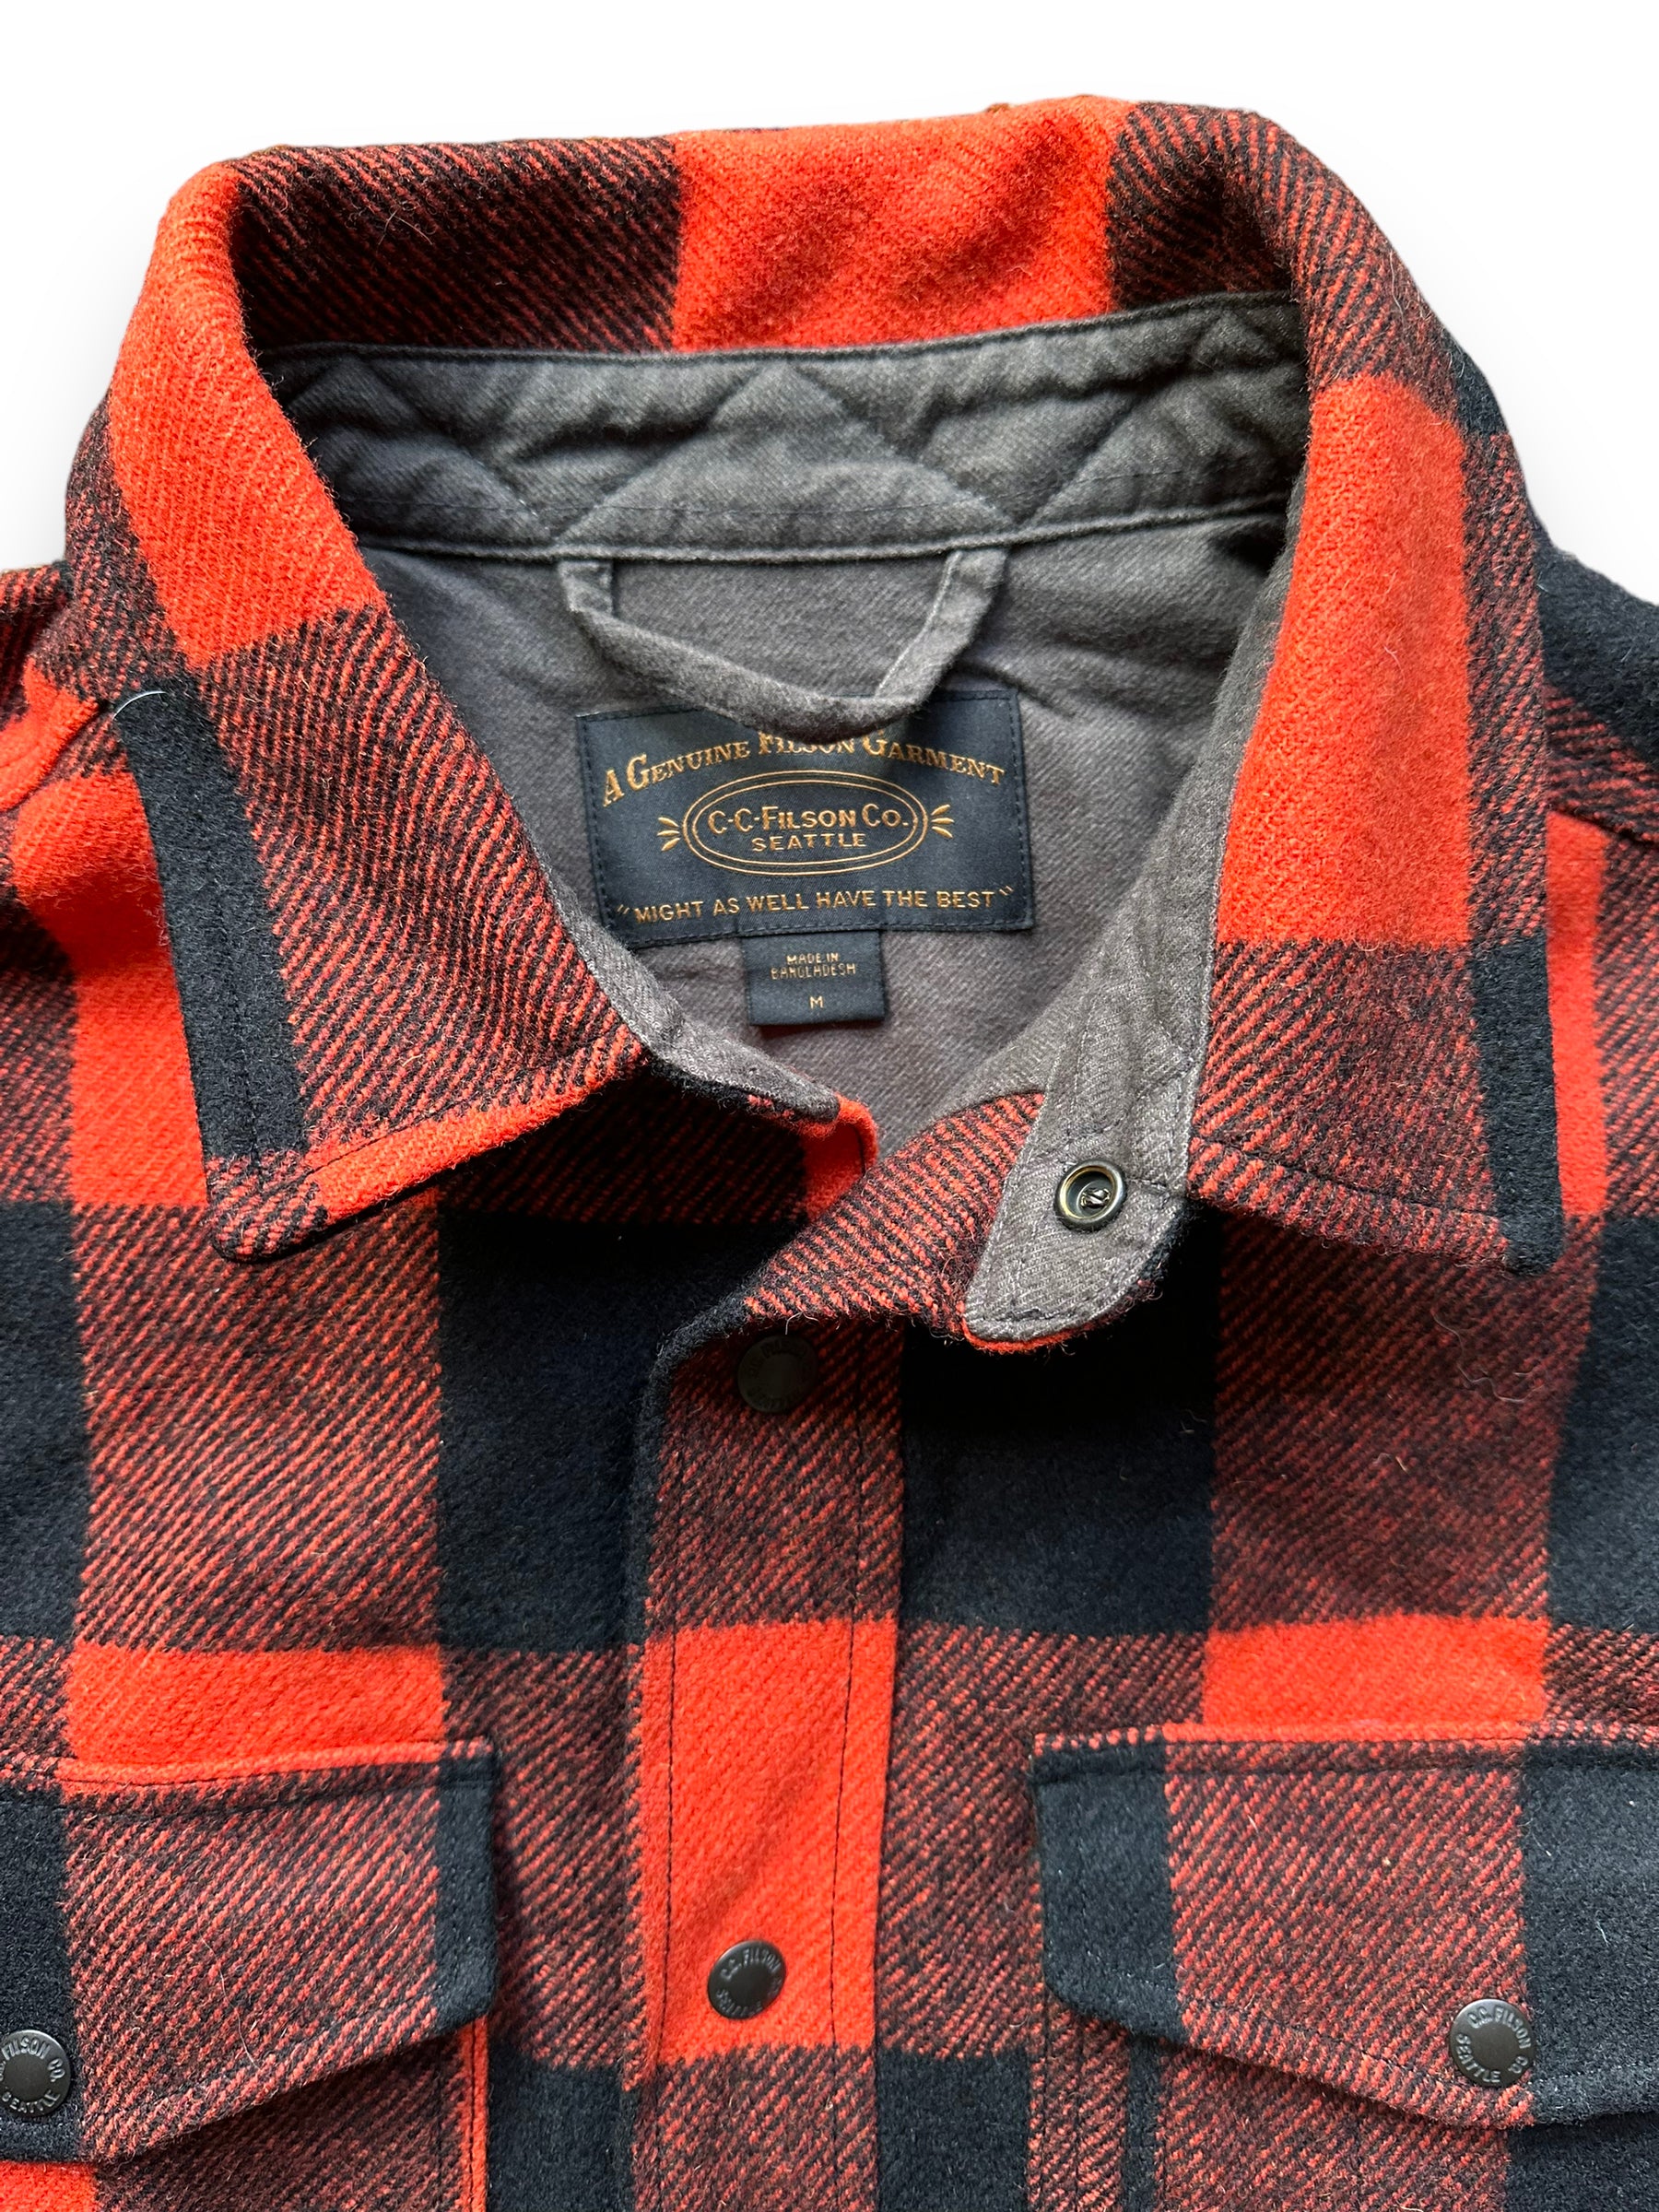 Filson Black Blaze Mackinaw Lined Jac Shirt SZ M | Barn Owl Vintage Goods |  Vintage Filson Workwear Seattle